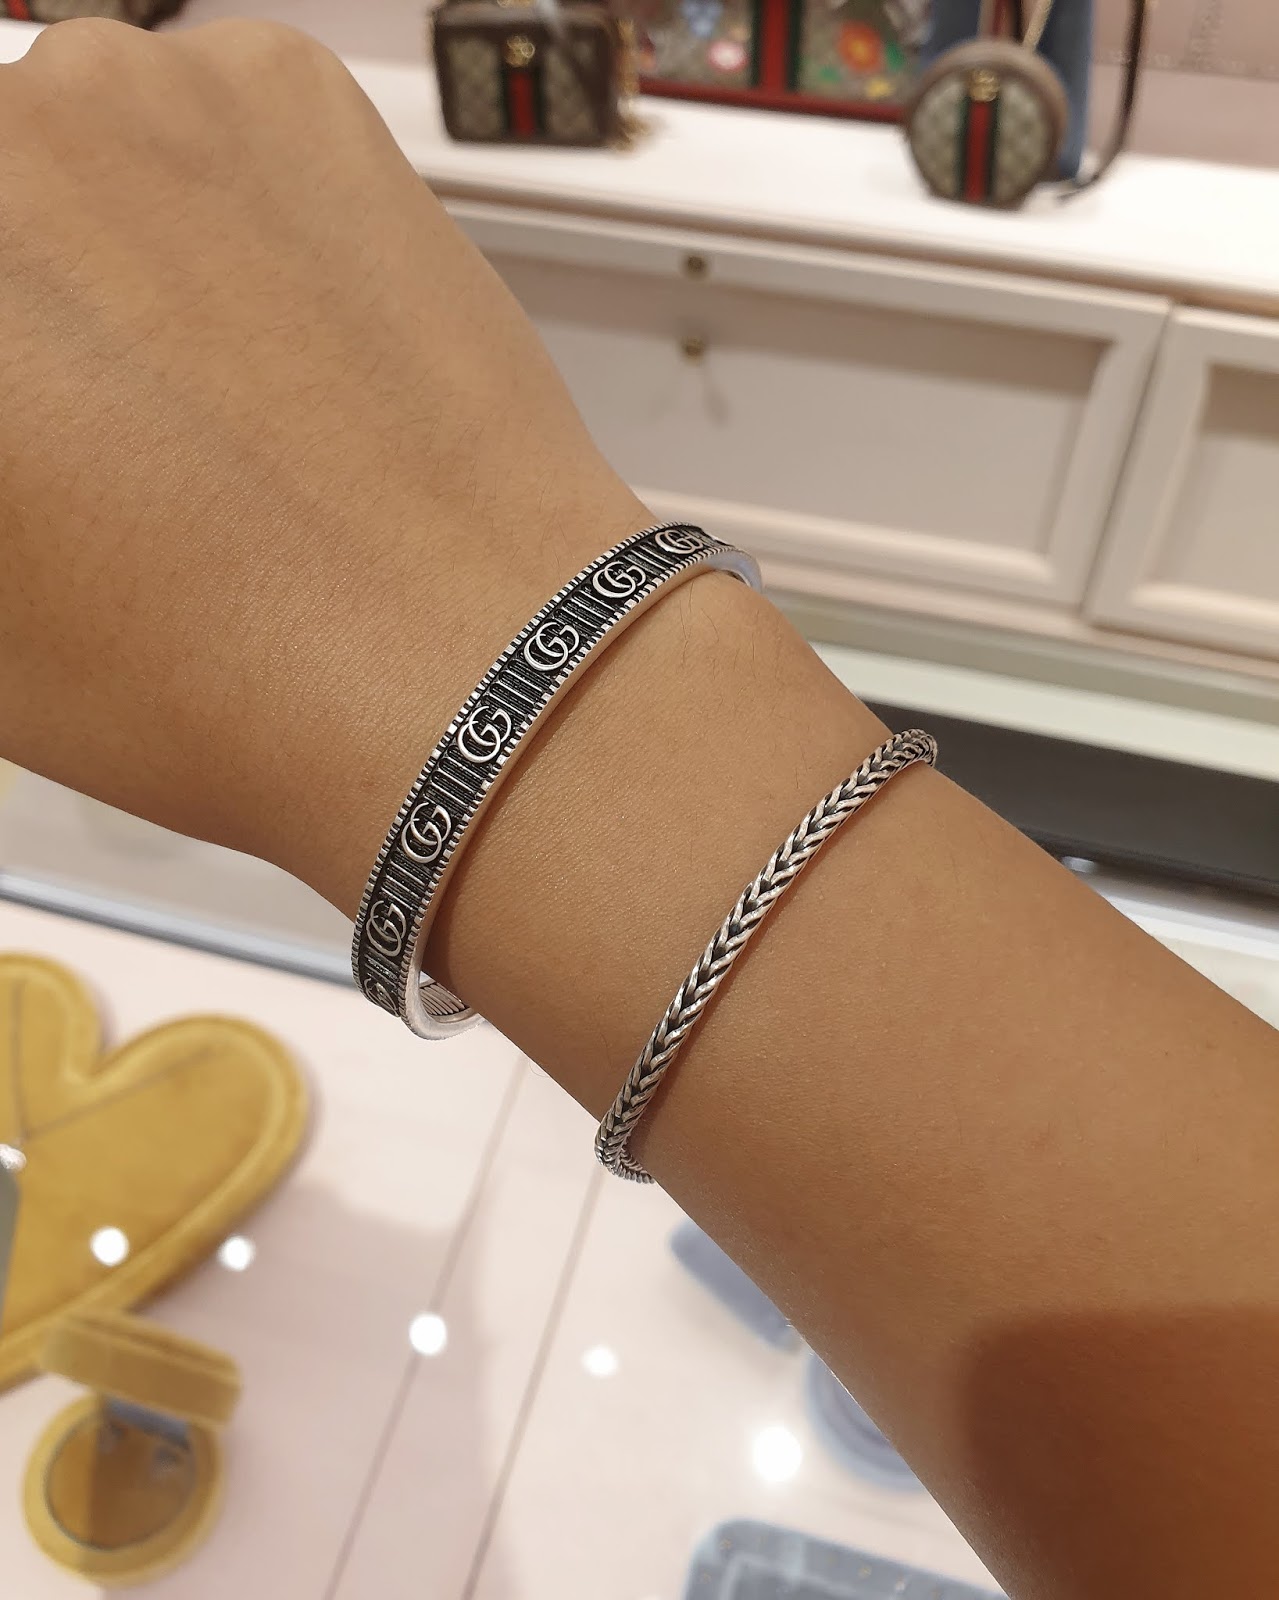 gucci silver bead bracelet